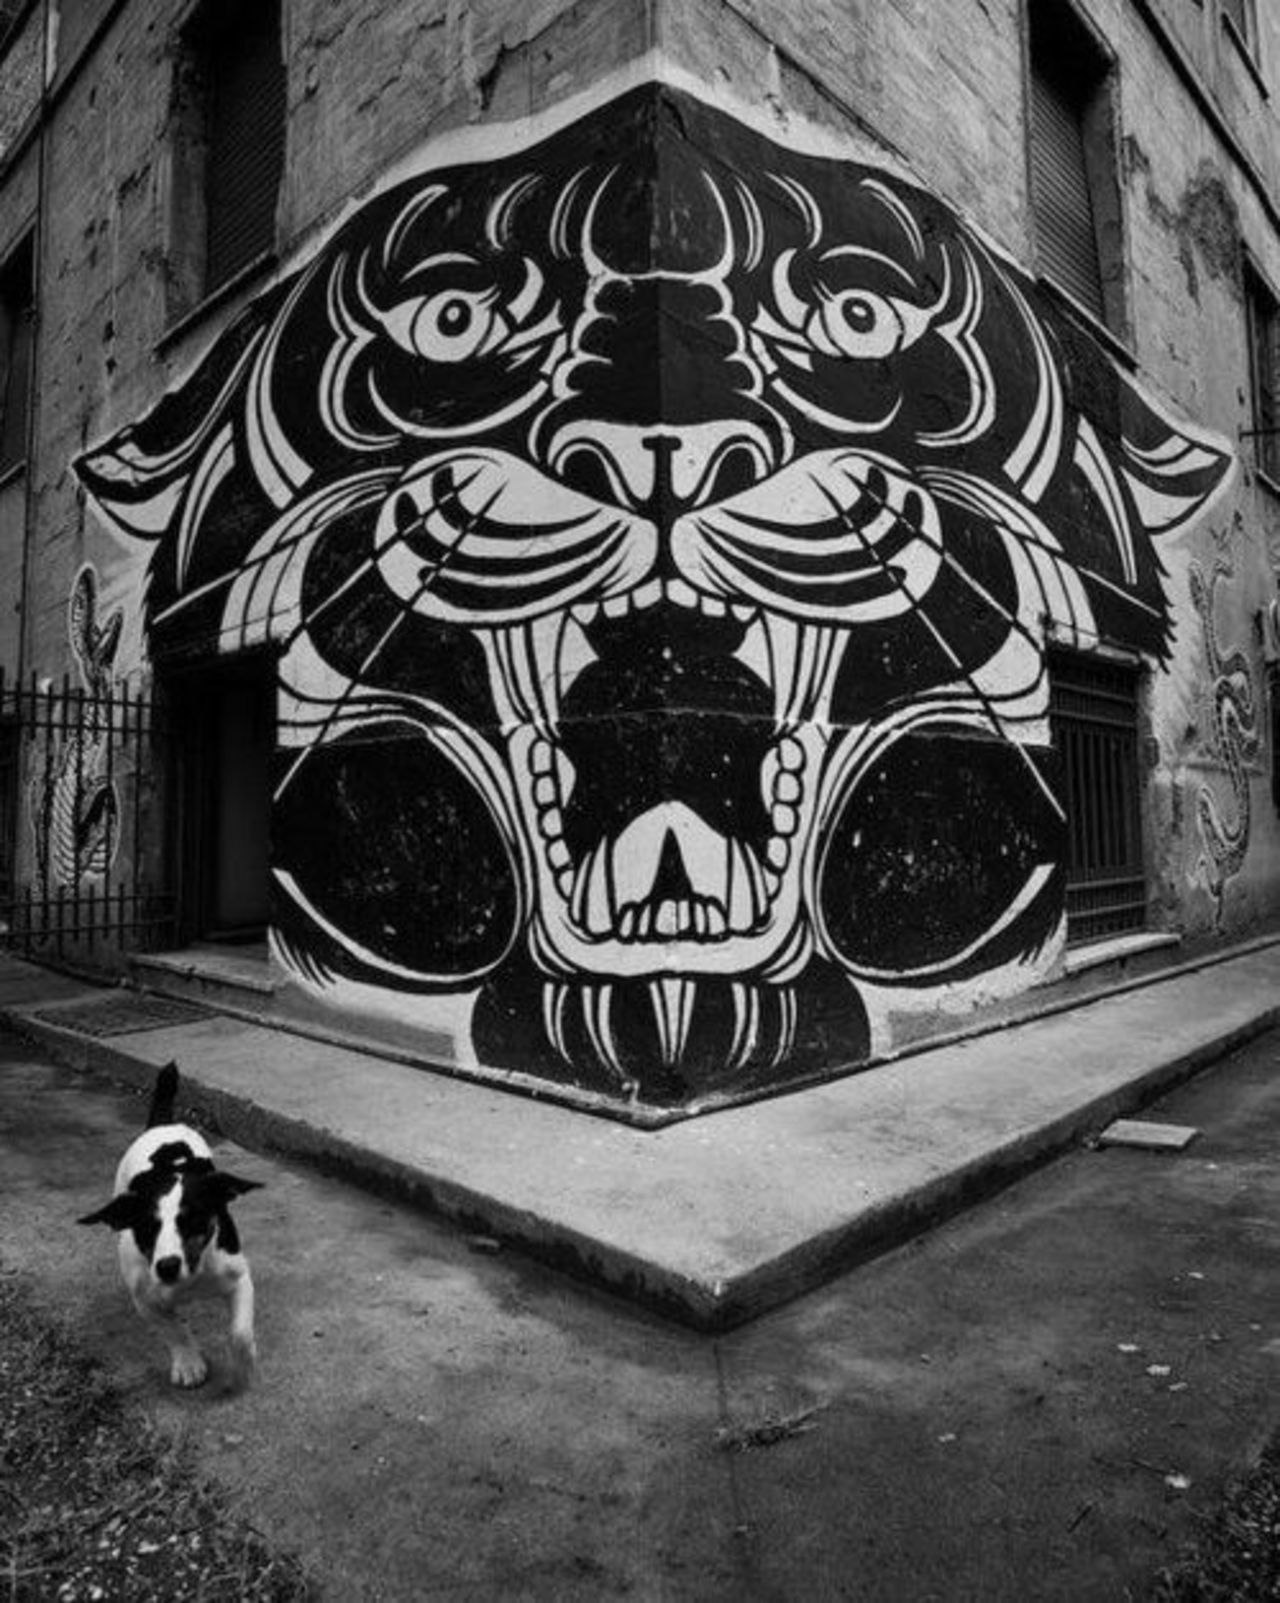 #streetart RT @StreetArtBuzz "Artist unknown #graffiti #mural http://t.co/8y9Z92oolr" http://ow.ly/I8BbG